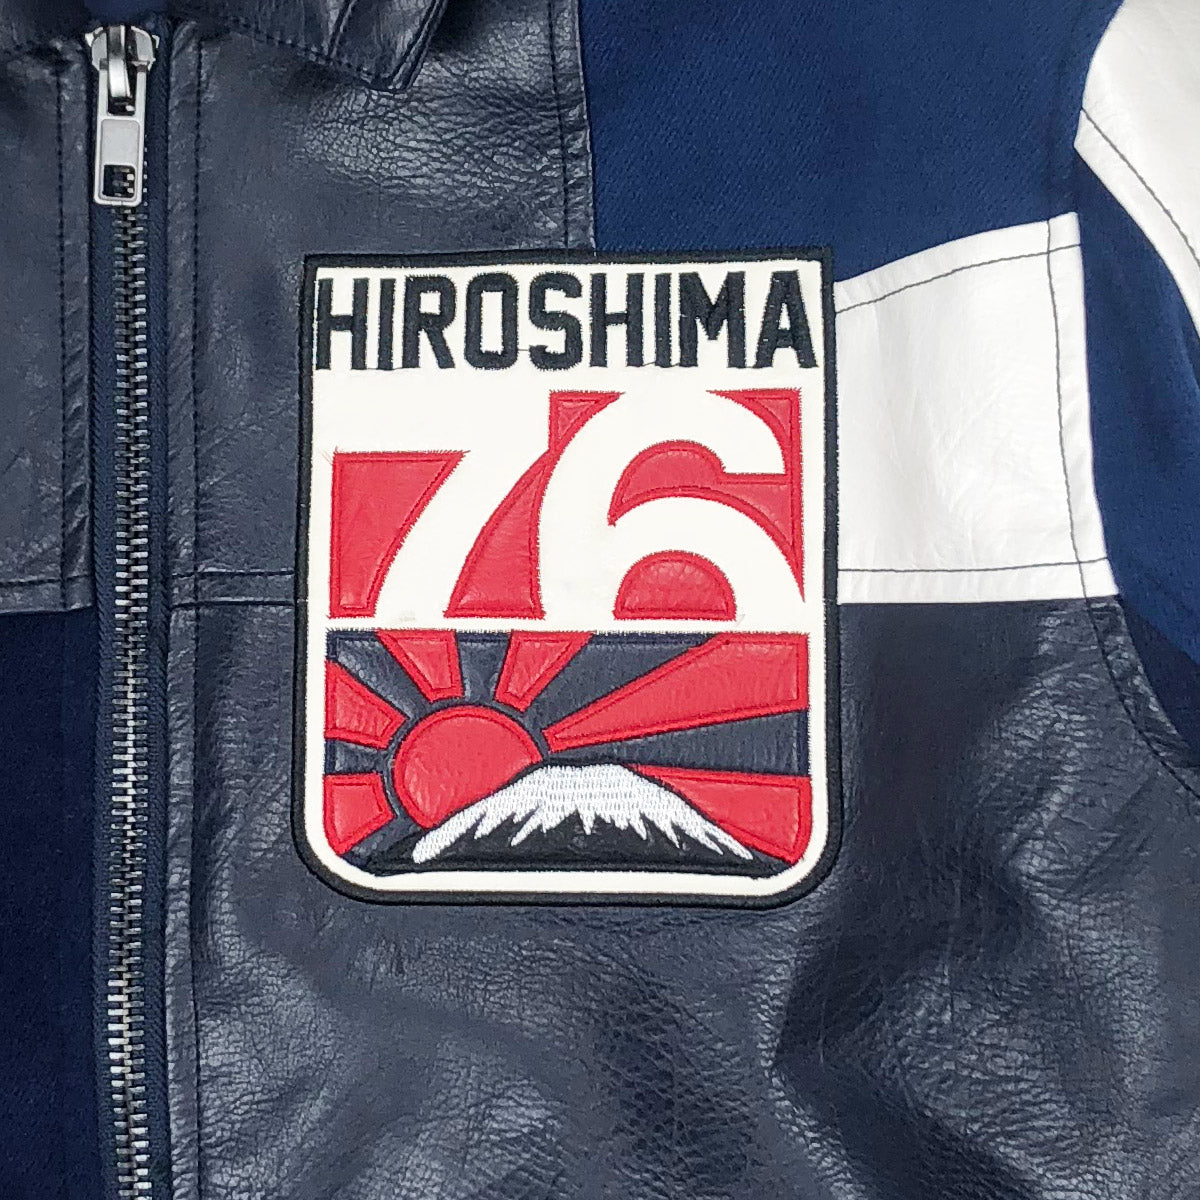 Iro-Ochi Men's 76 Hiroshima Jacket